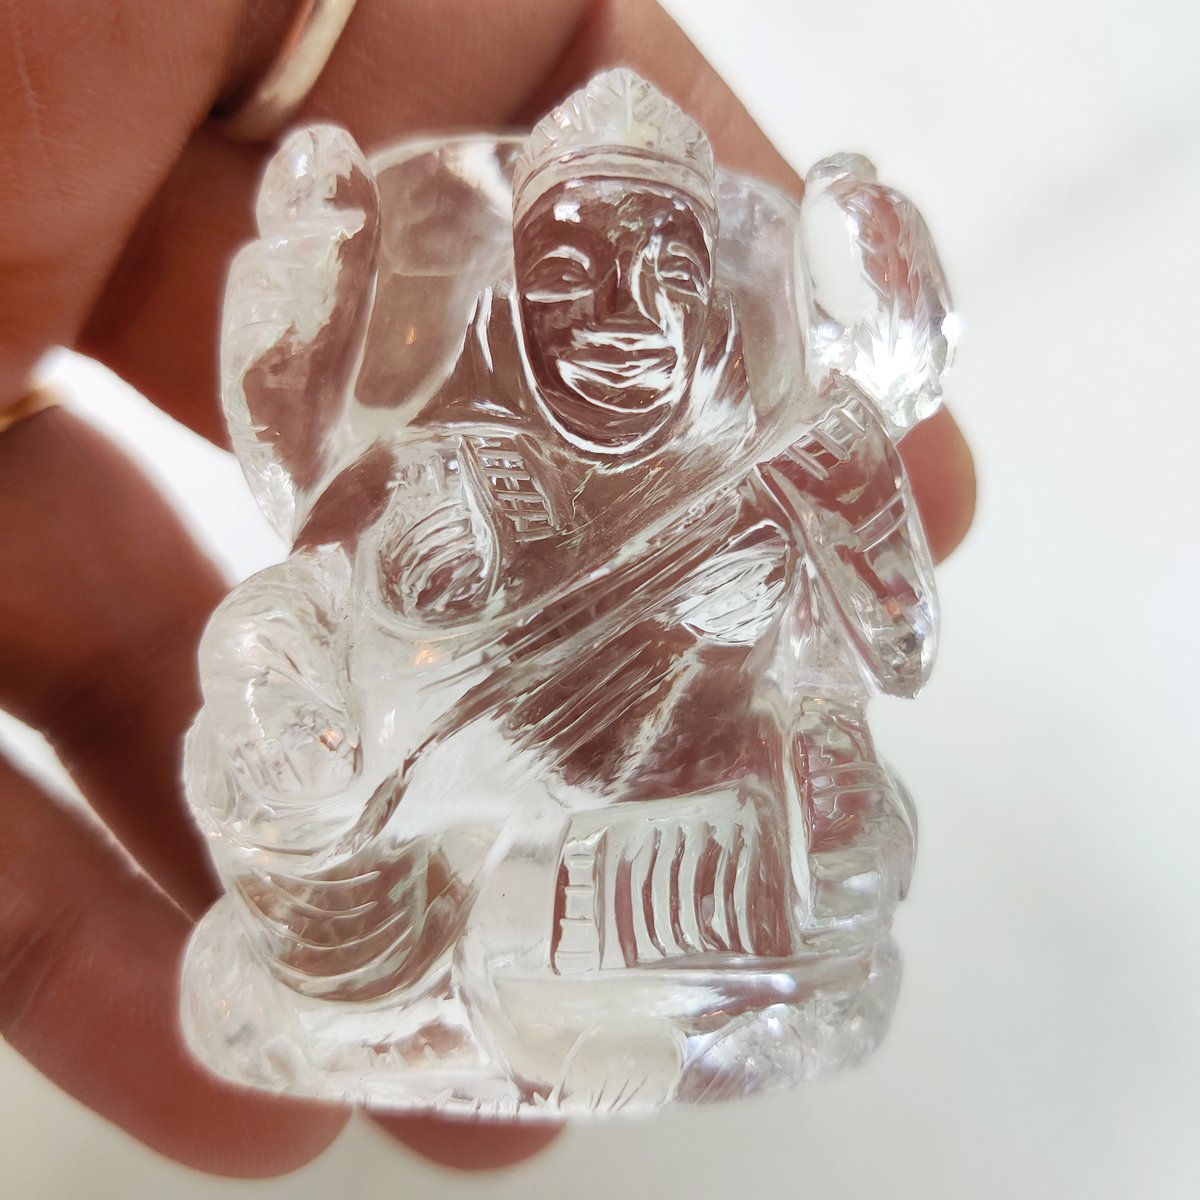 ebay.com/itm/1449938938…
#crystalquartz #quartzsaraswati #handmadegifts #handicraftshop #handcarving #gemstonefigure